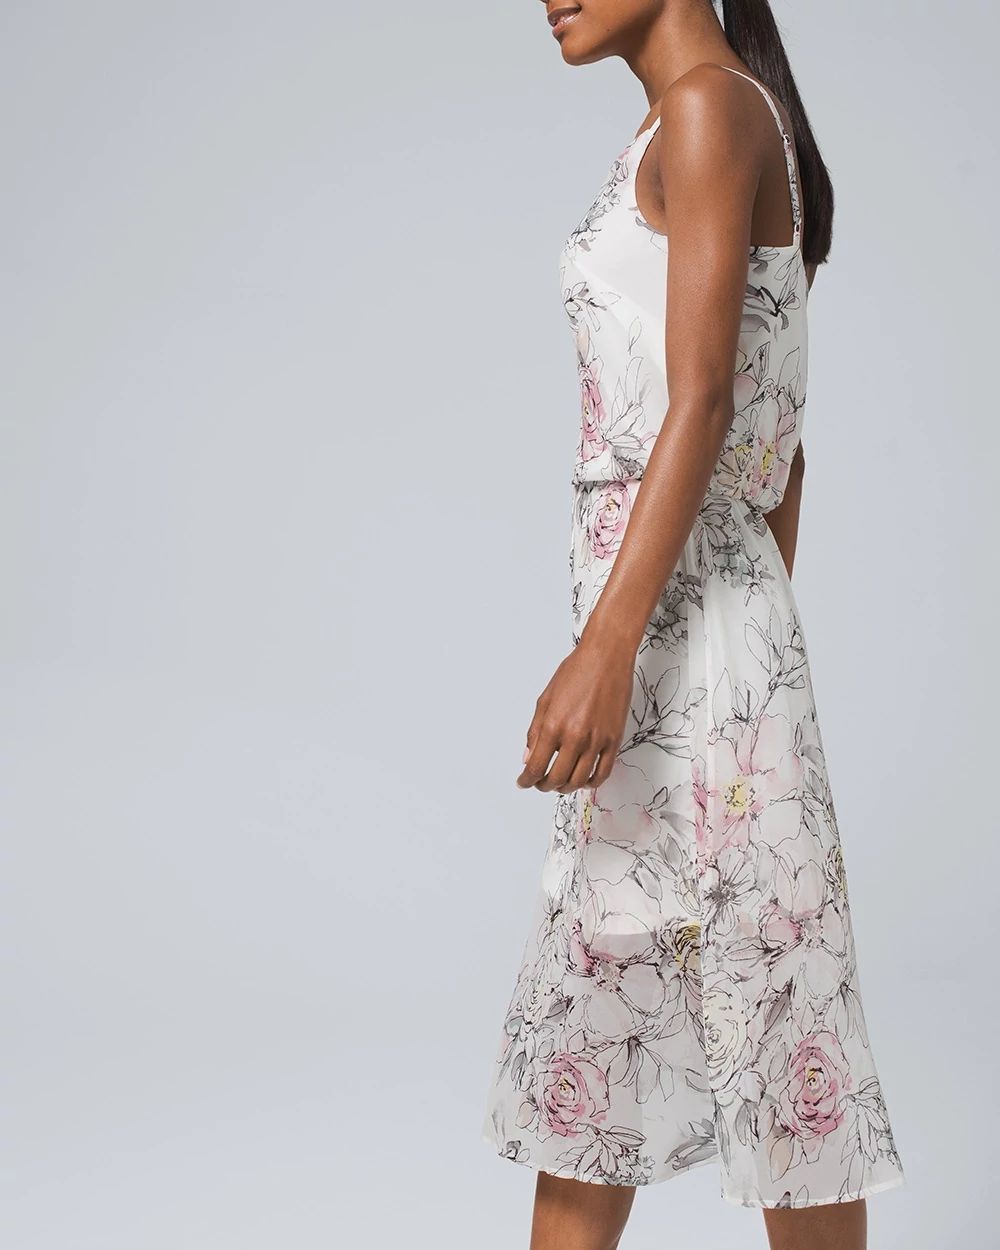 Floral-Print Blouson Dress click to view larger image.